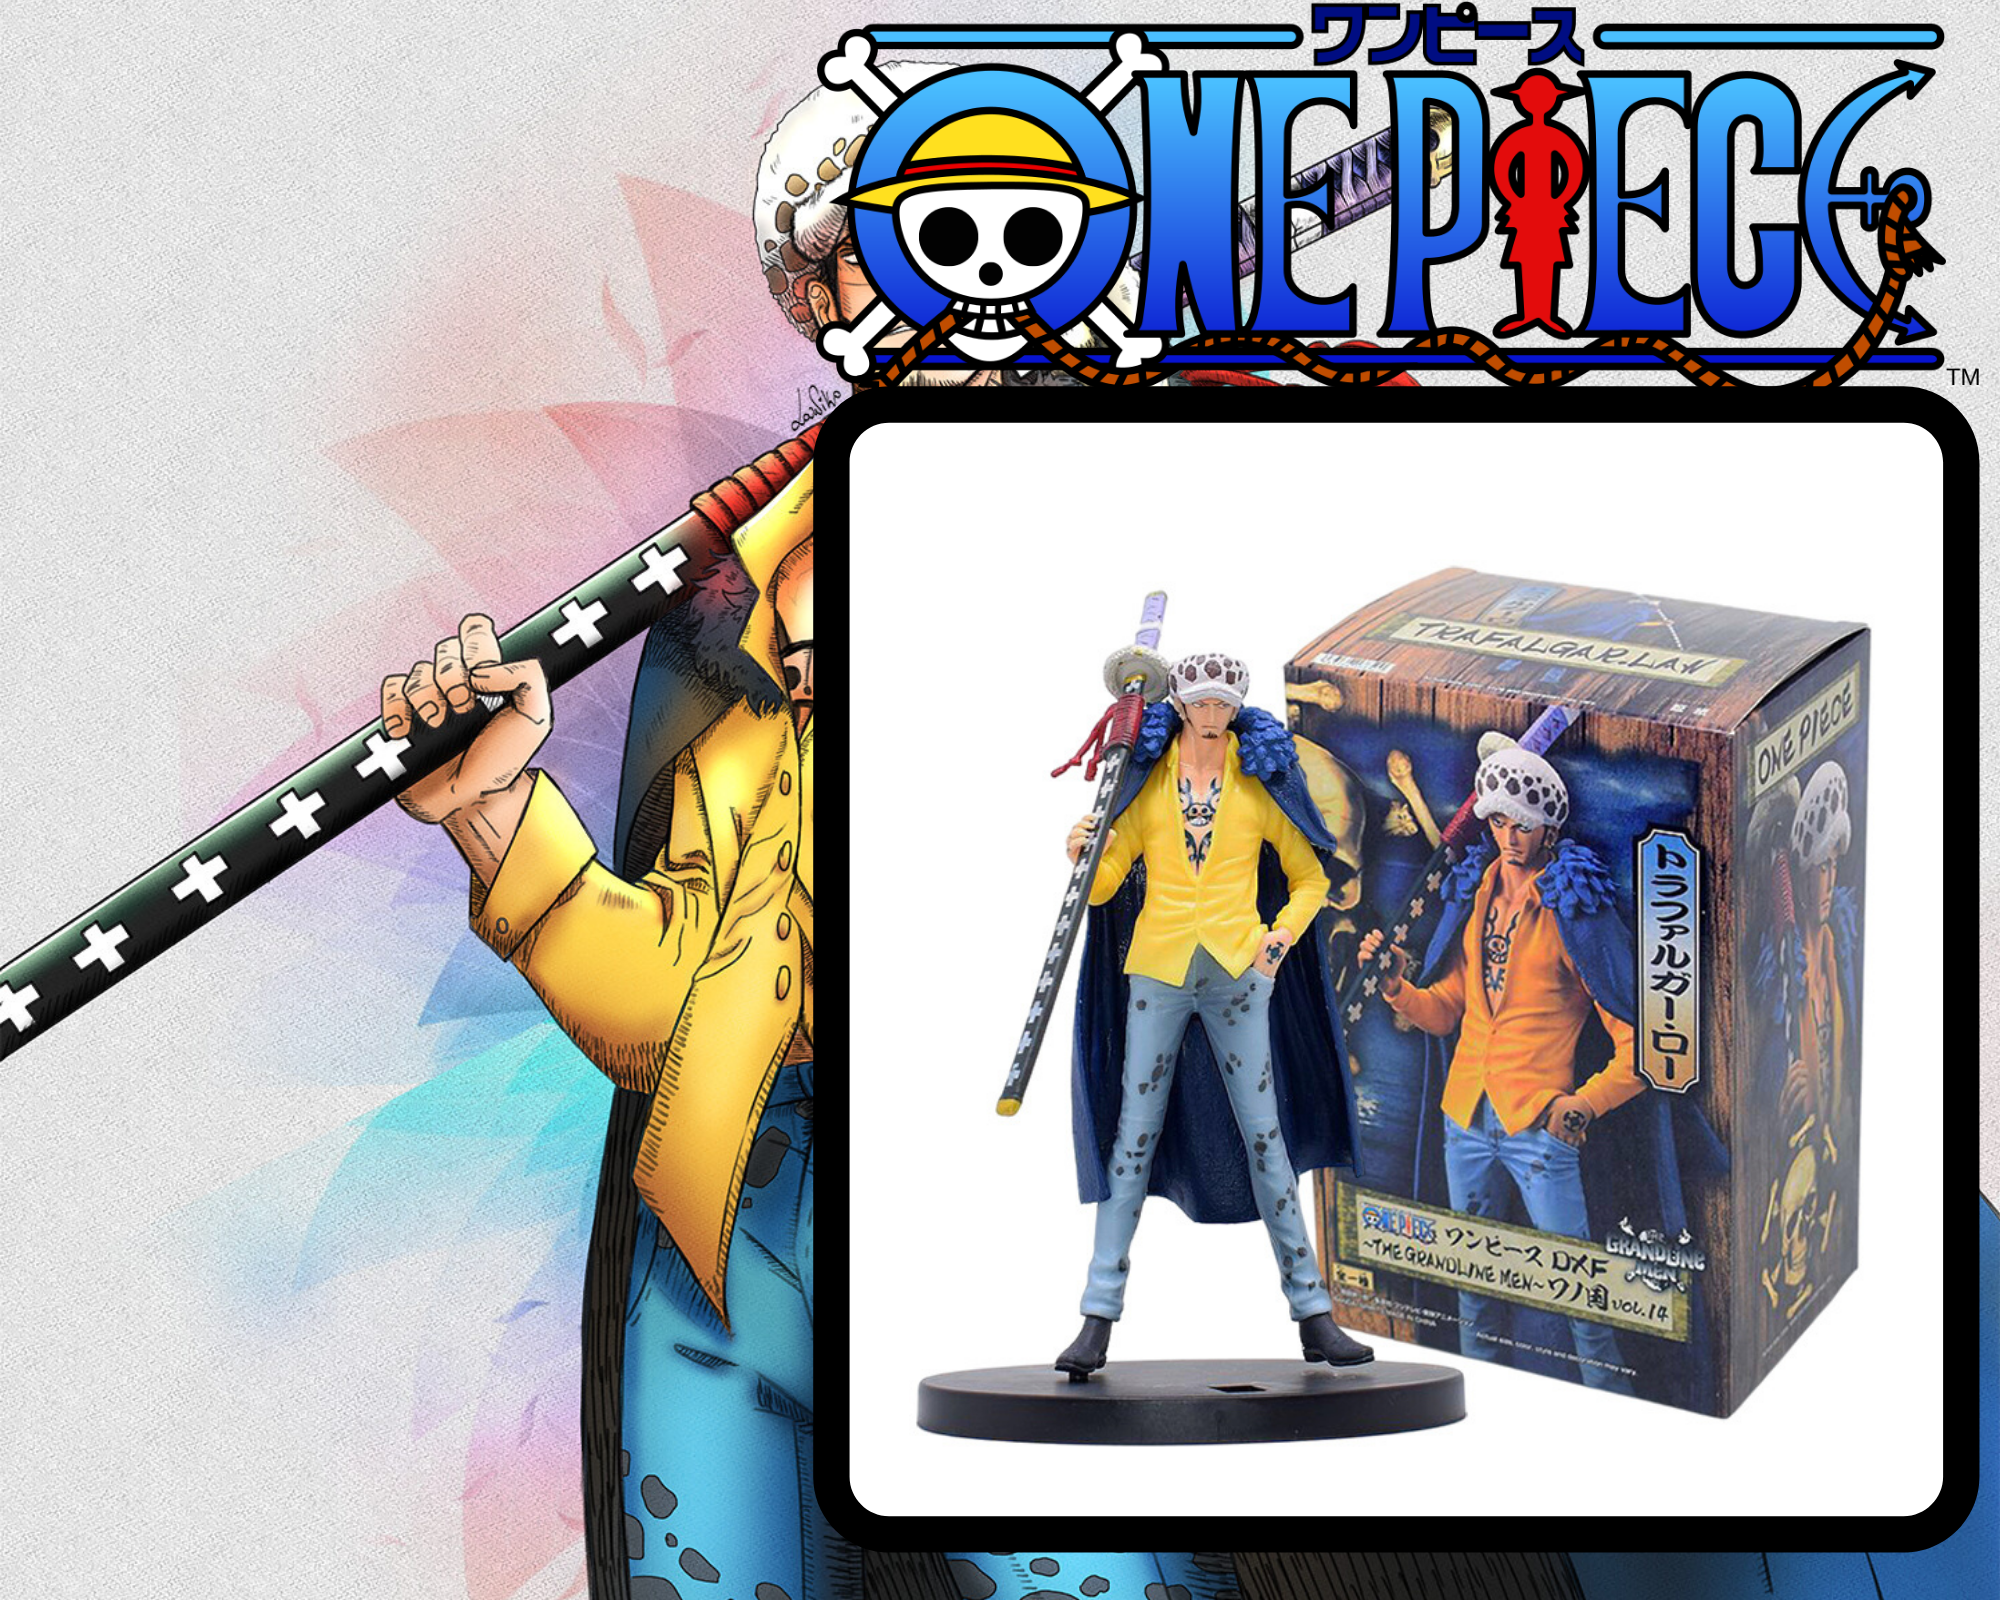 New Anime One Piece PVC Action Figures 6 PCS / Lot